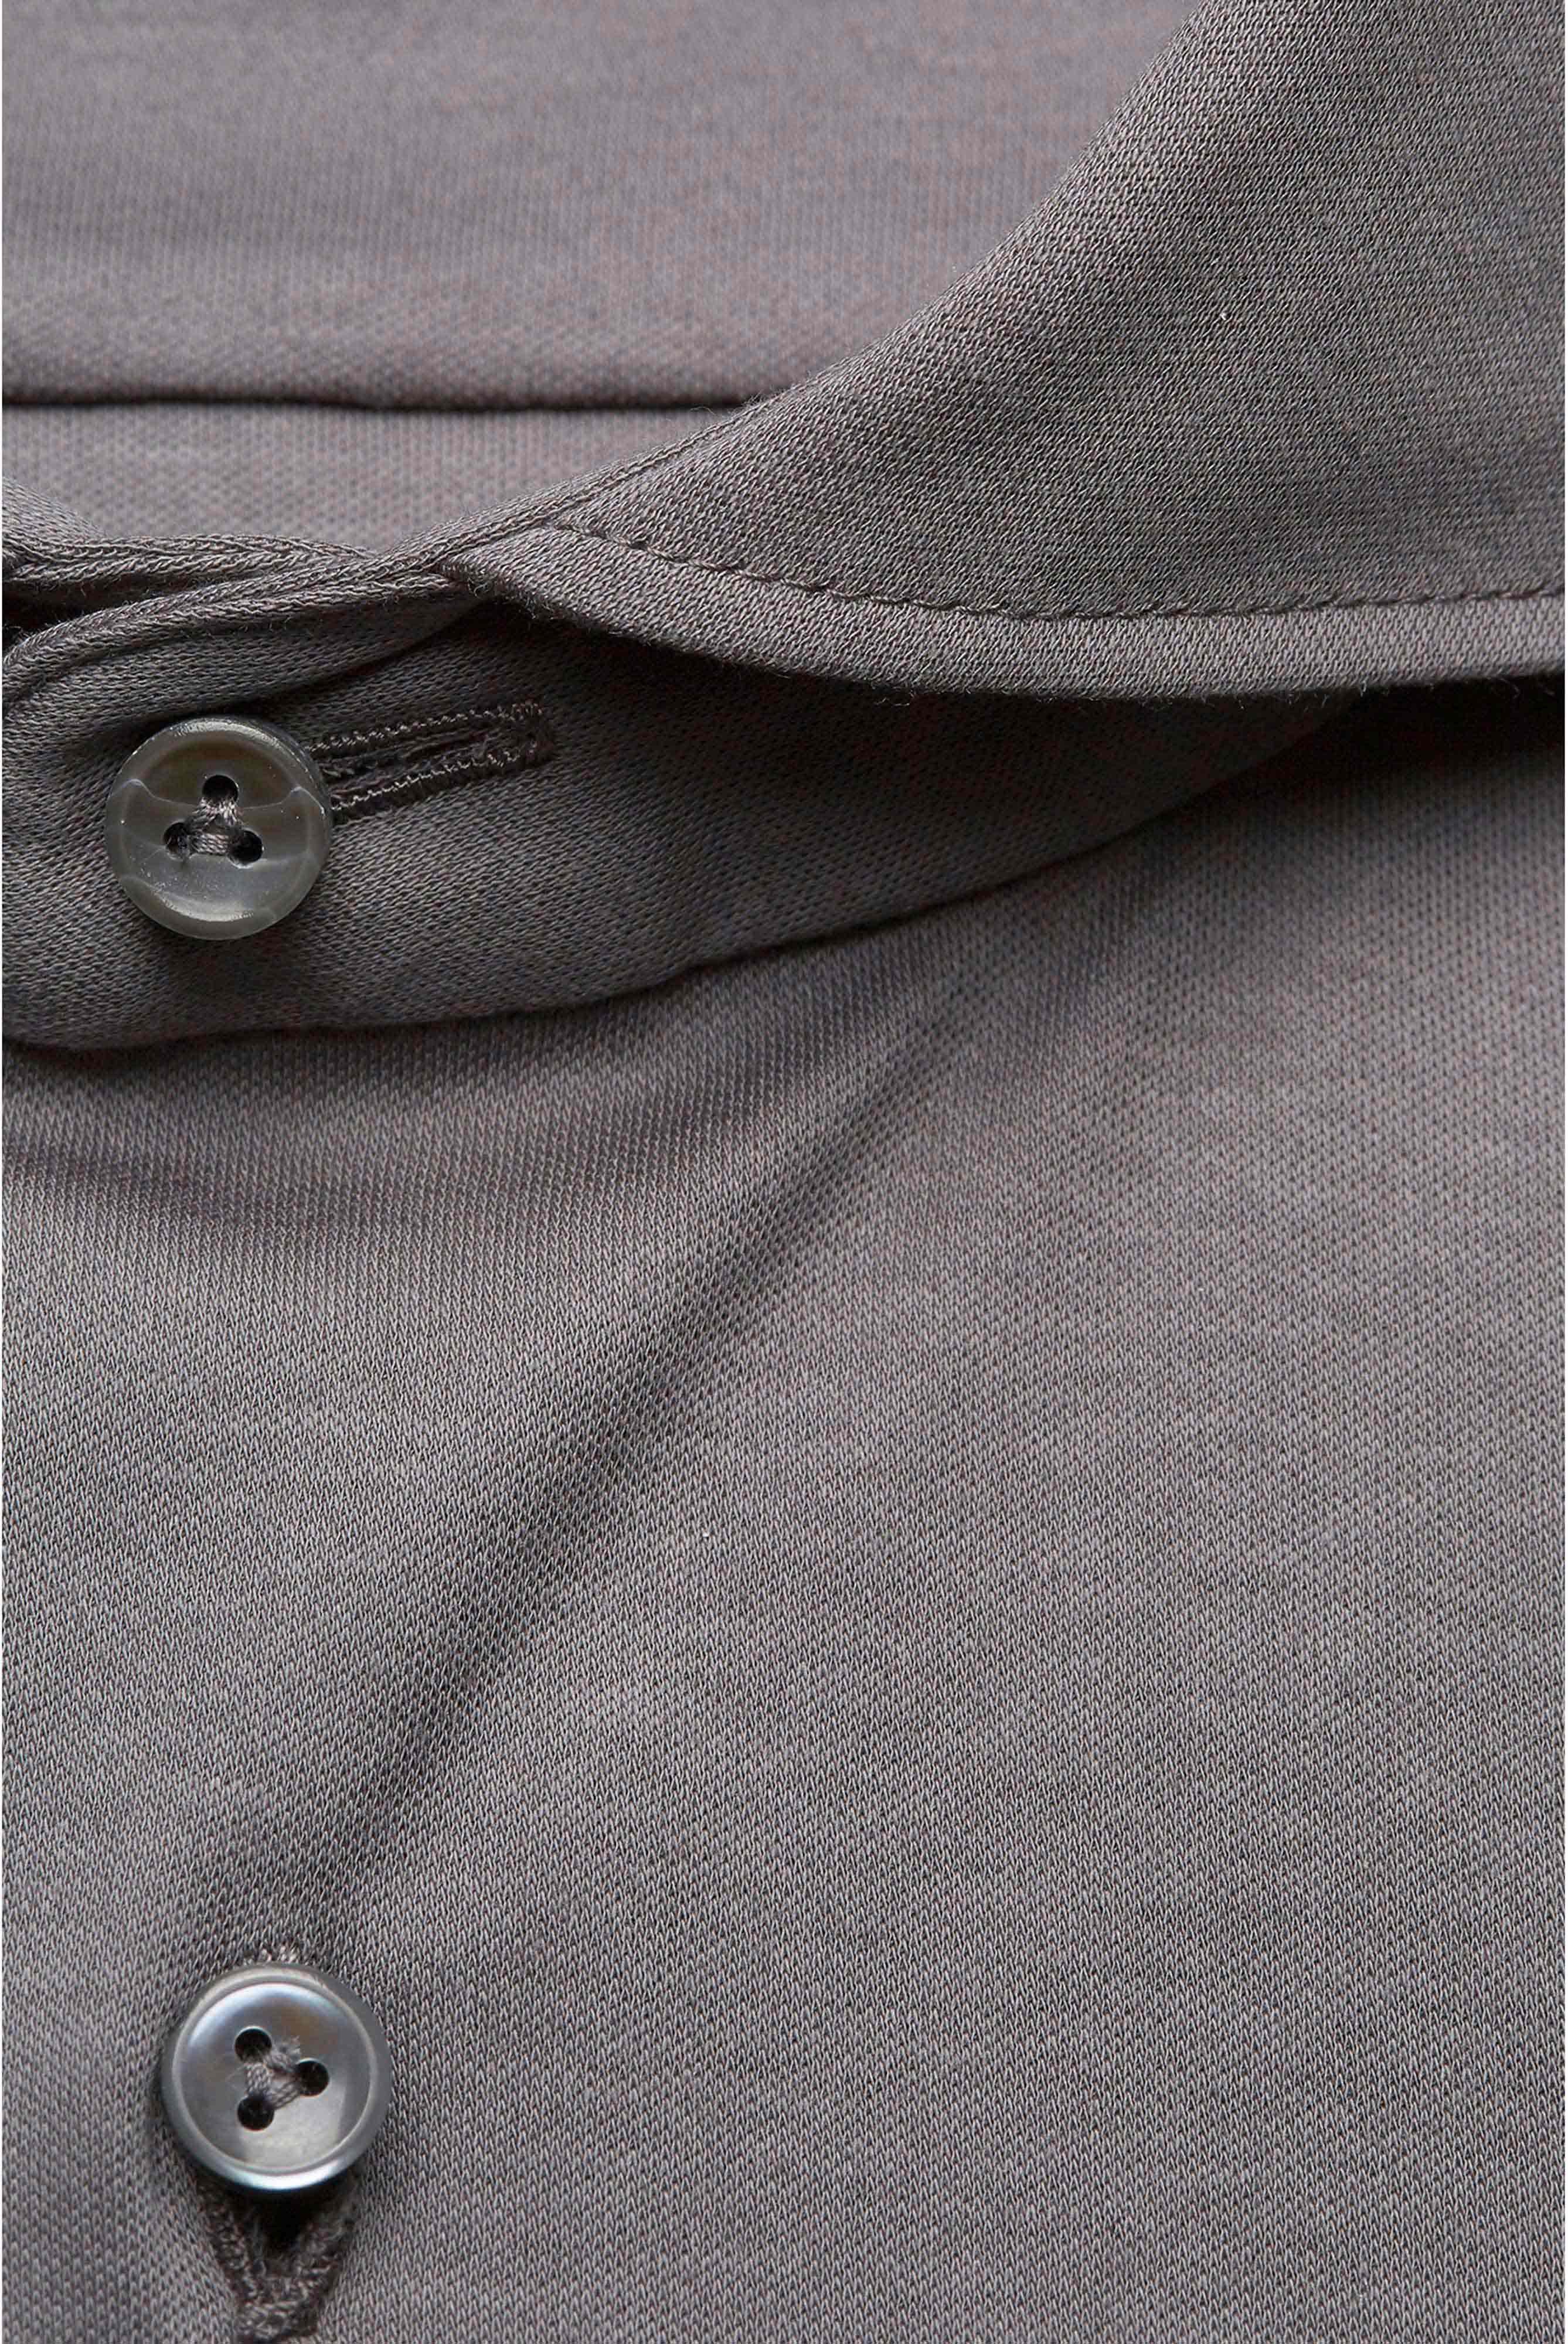 Casual Shirts+Jersey Shirt Swiss Cotton Tailor Fit+20.1683.UC.180031.070.XXL